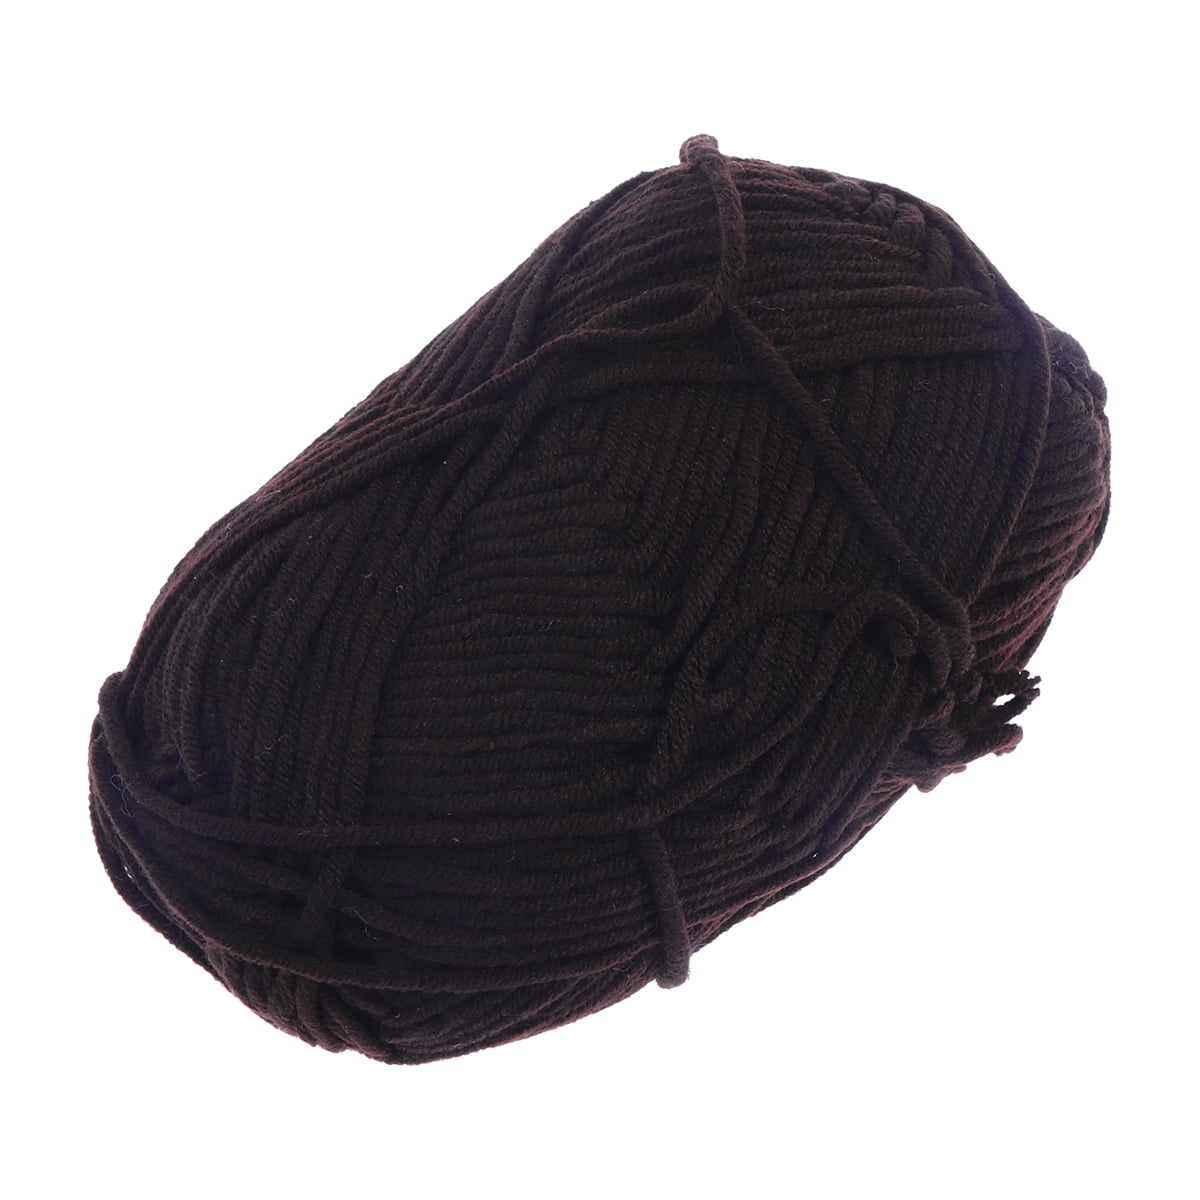  3PCS 150g Beginners Black Yarn for Crocheting and Knitting,260  Yards Cotton Nylon Blend Yarn for Hand DIY Bag Basket Dolls and Cushion